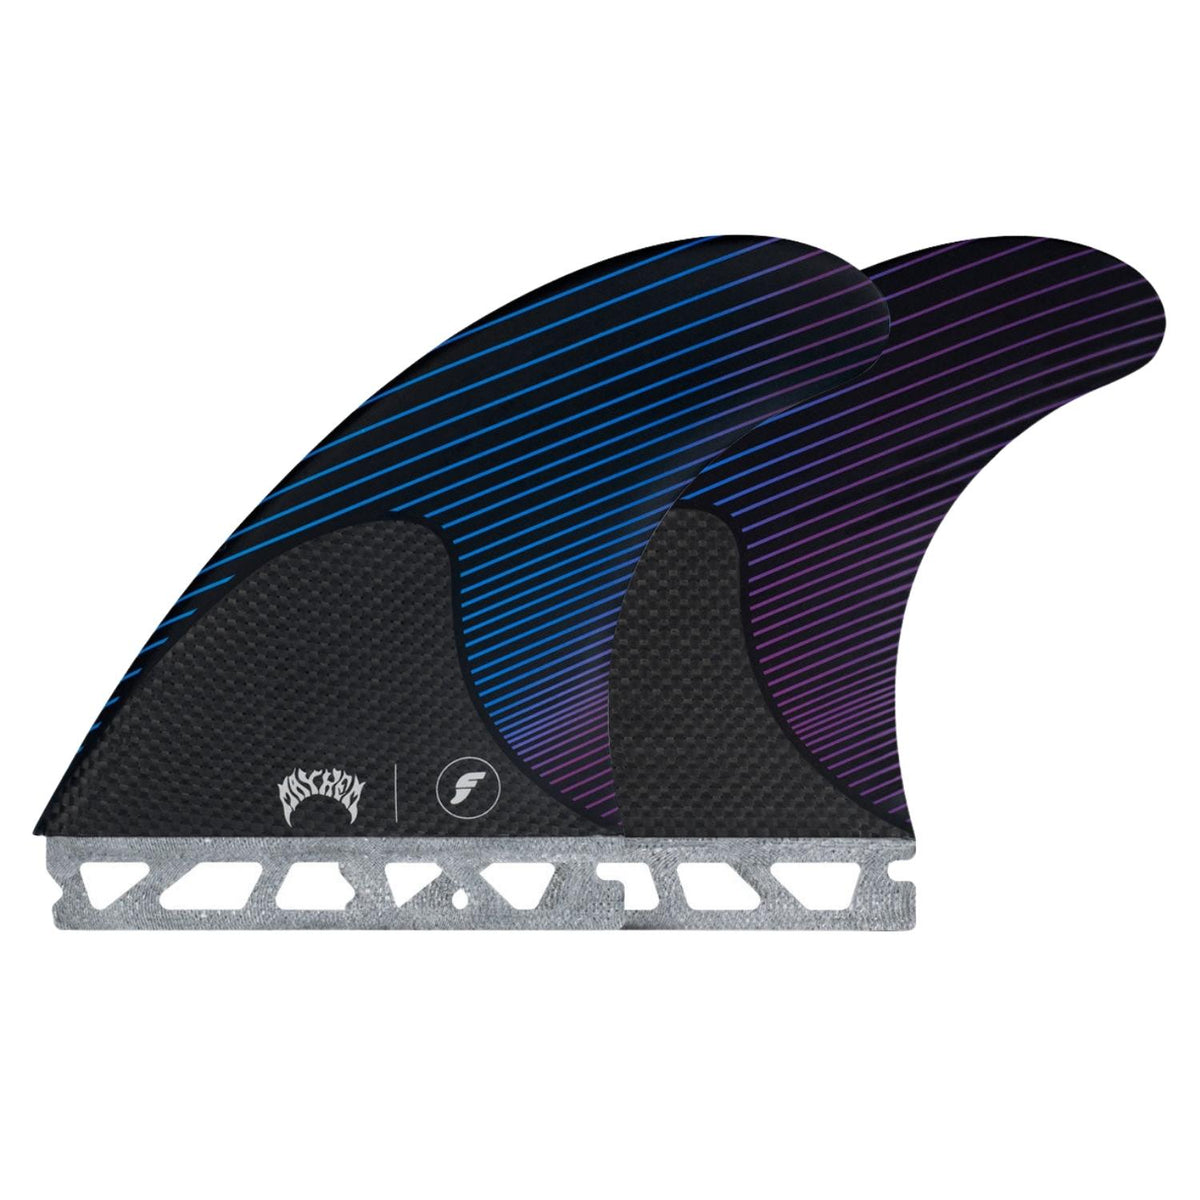 Futures Mayhem Large Thruster Surfboard Fins - Blue/Violet - Futures Fins by Futures Large Fins